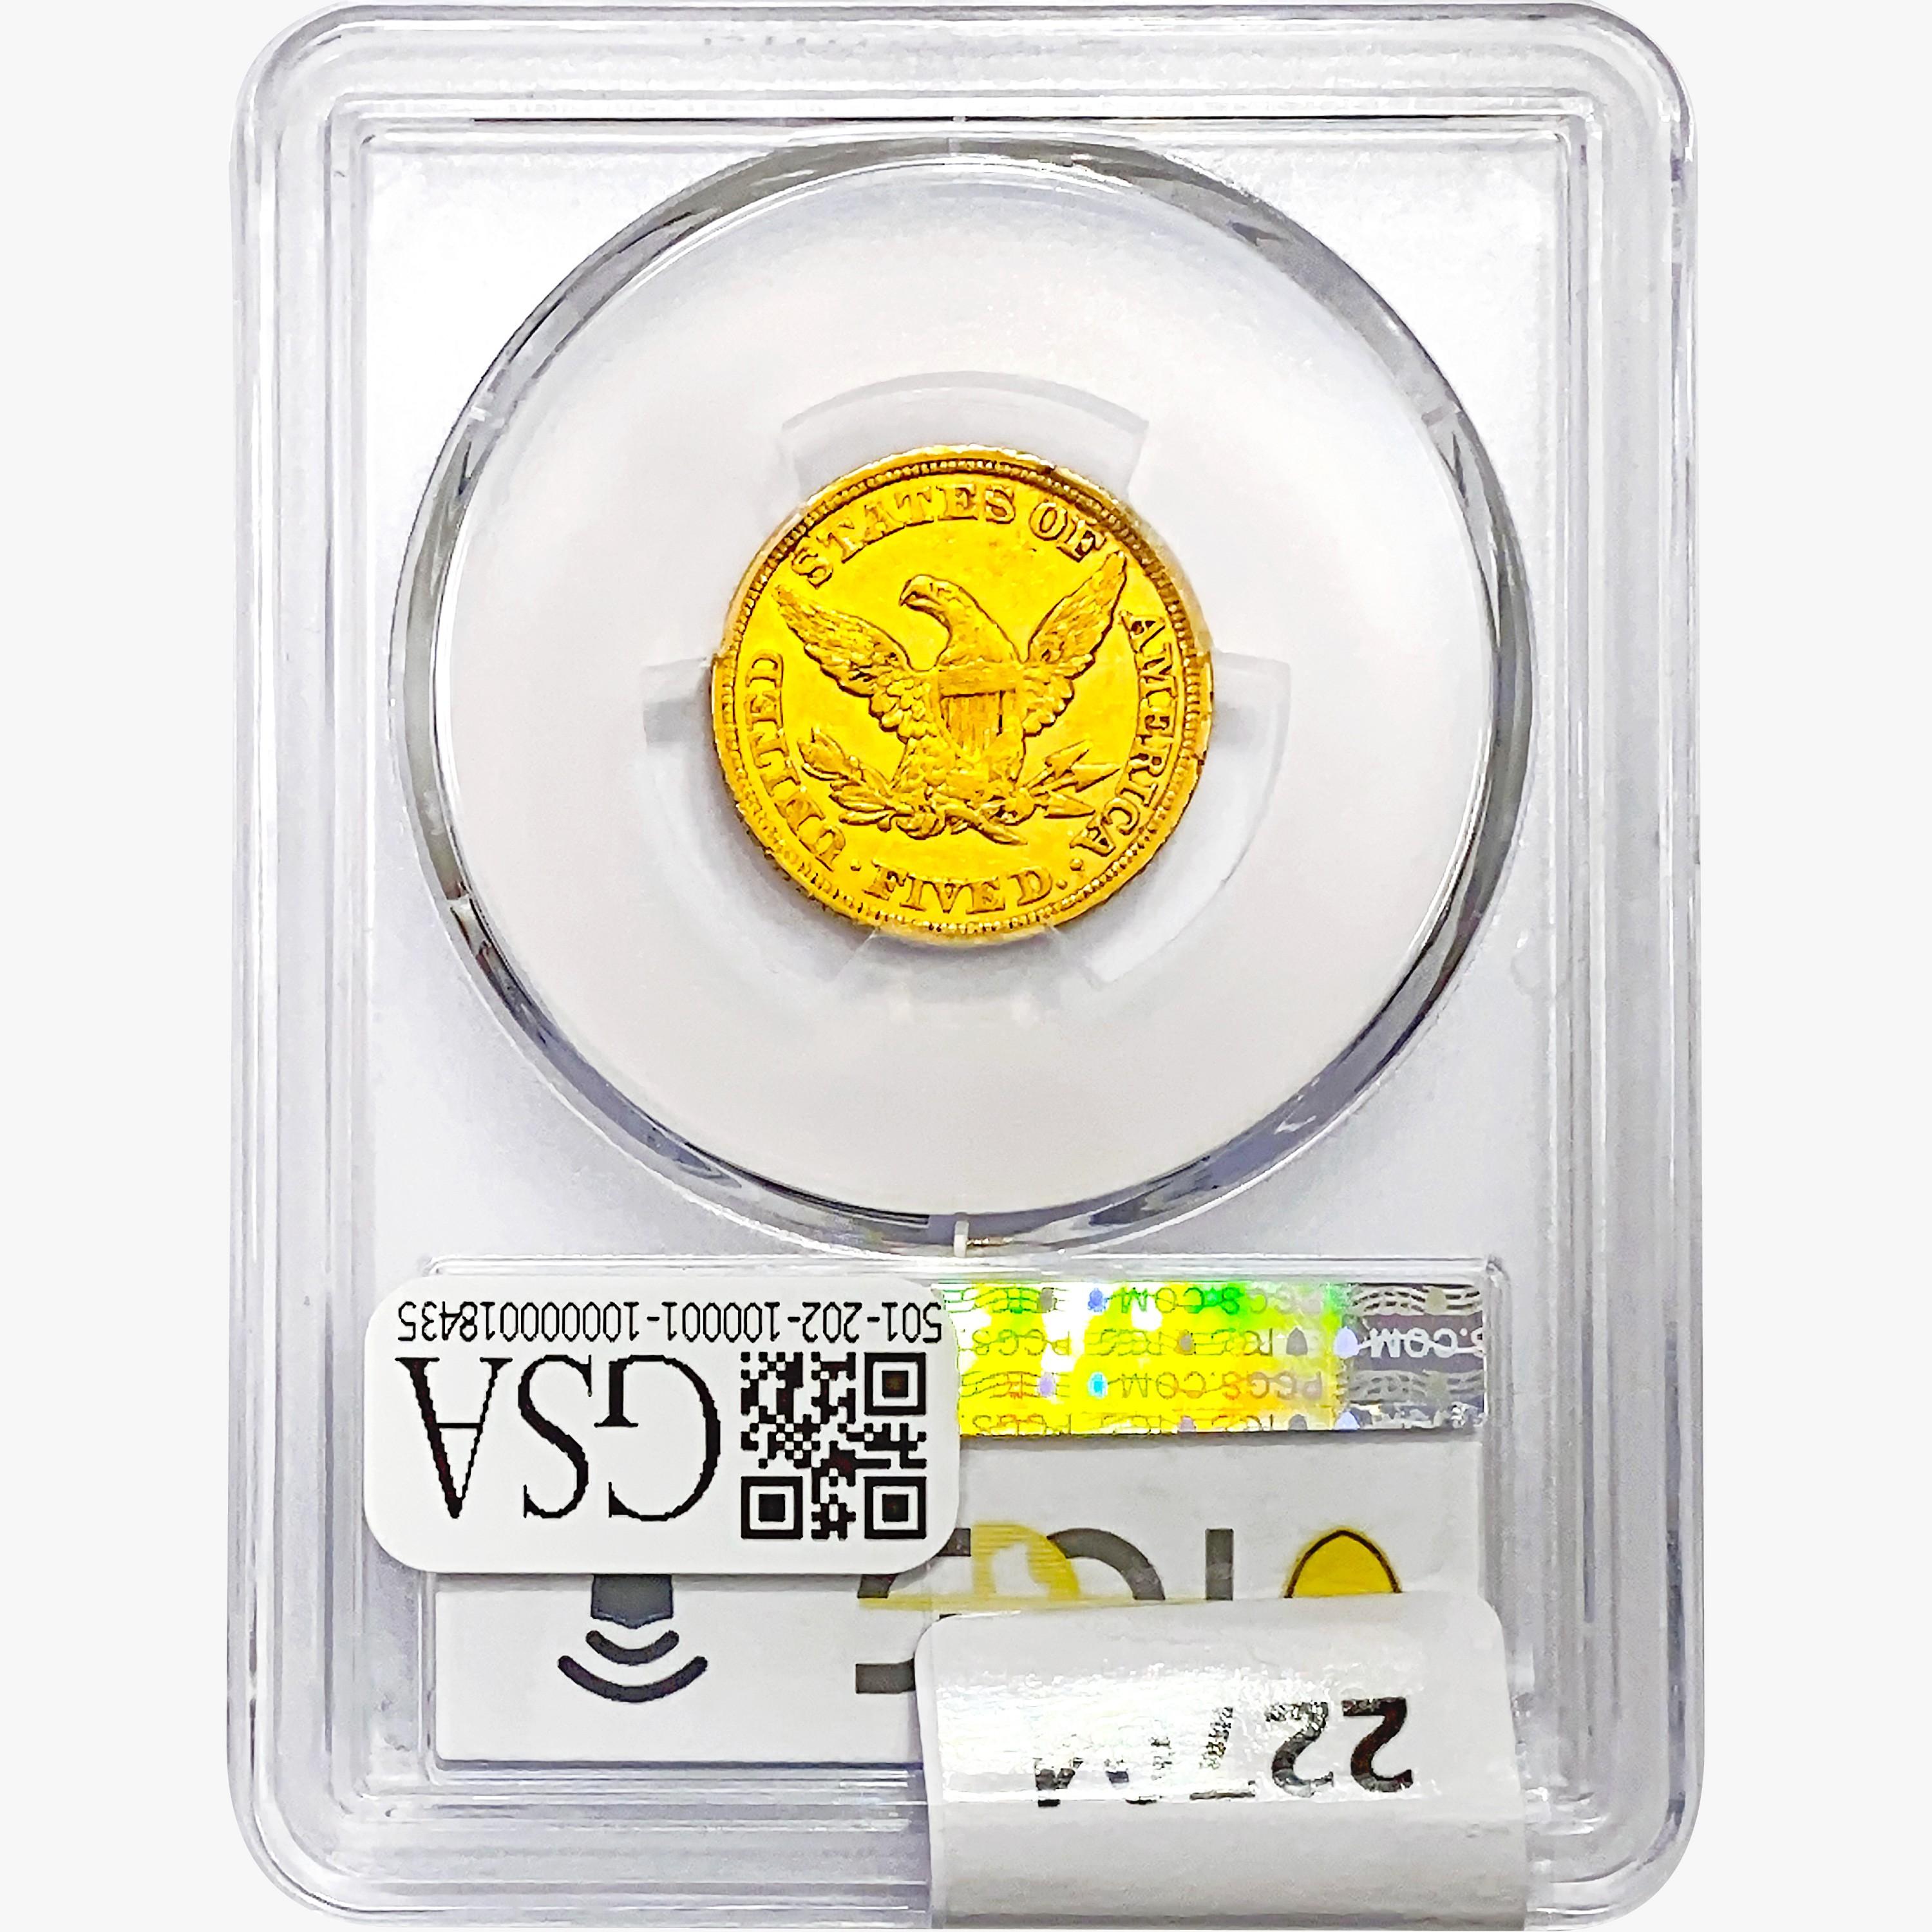 1847 $5 Gold Half Eagle PCGS XF45 RPD FS-303